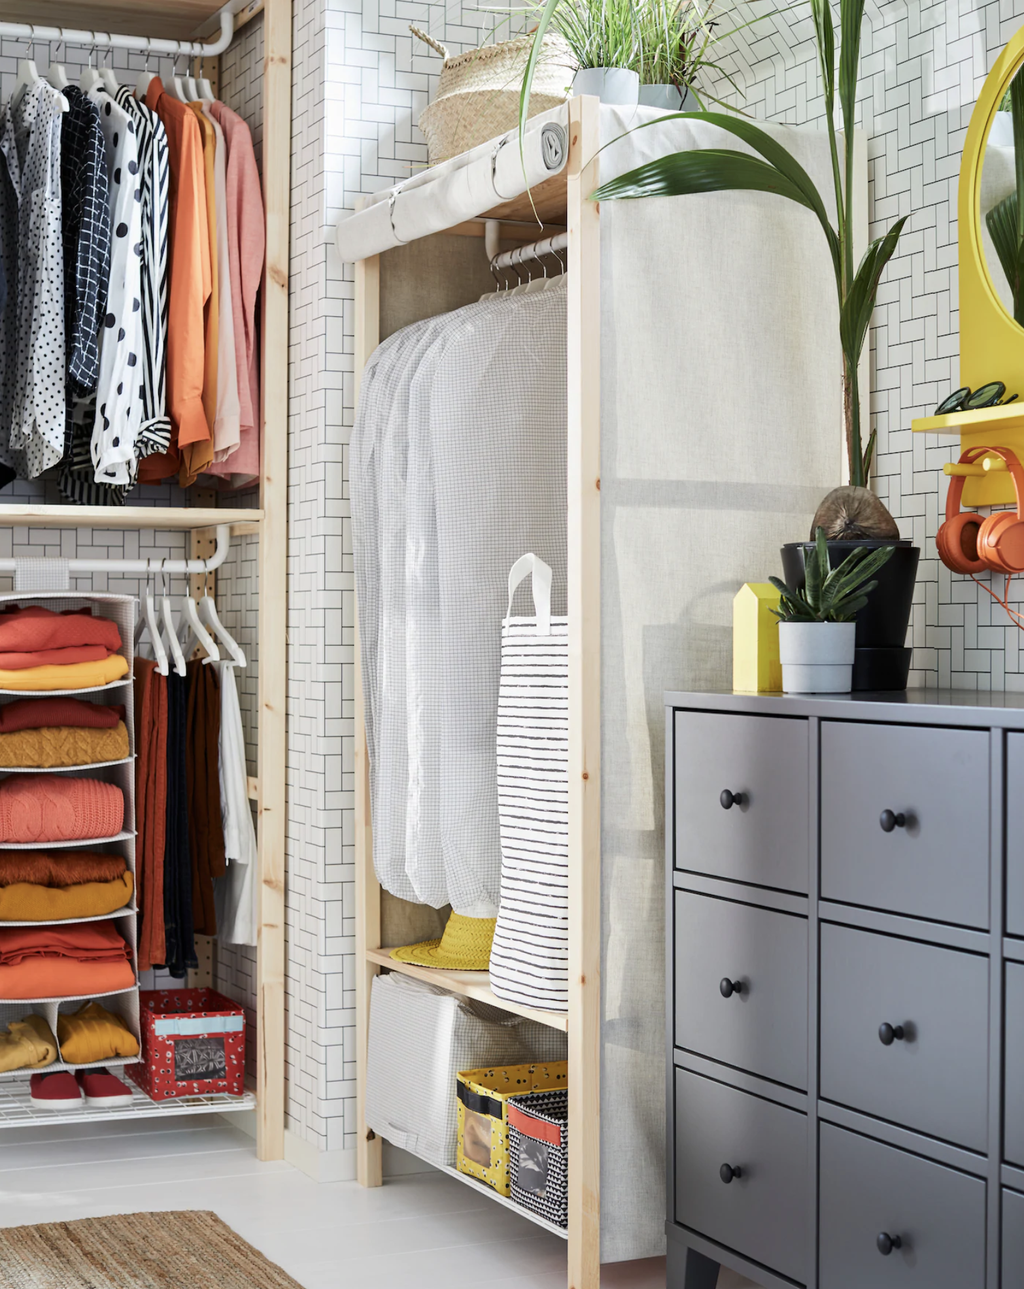 20 closet organization ideas – simple, DIY ways to max out on storage ...